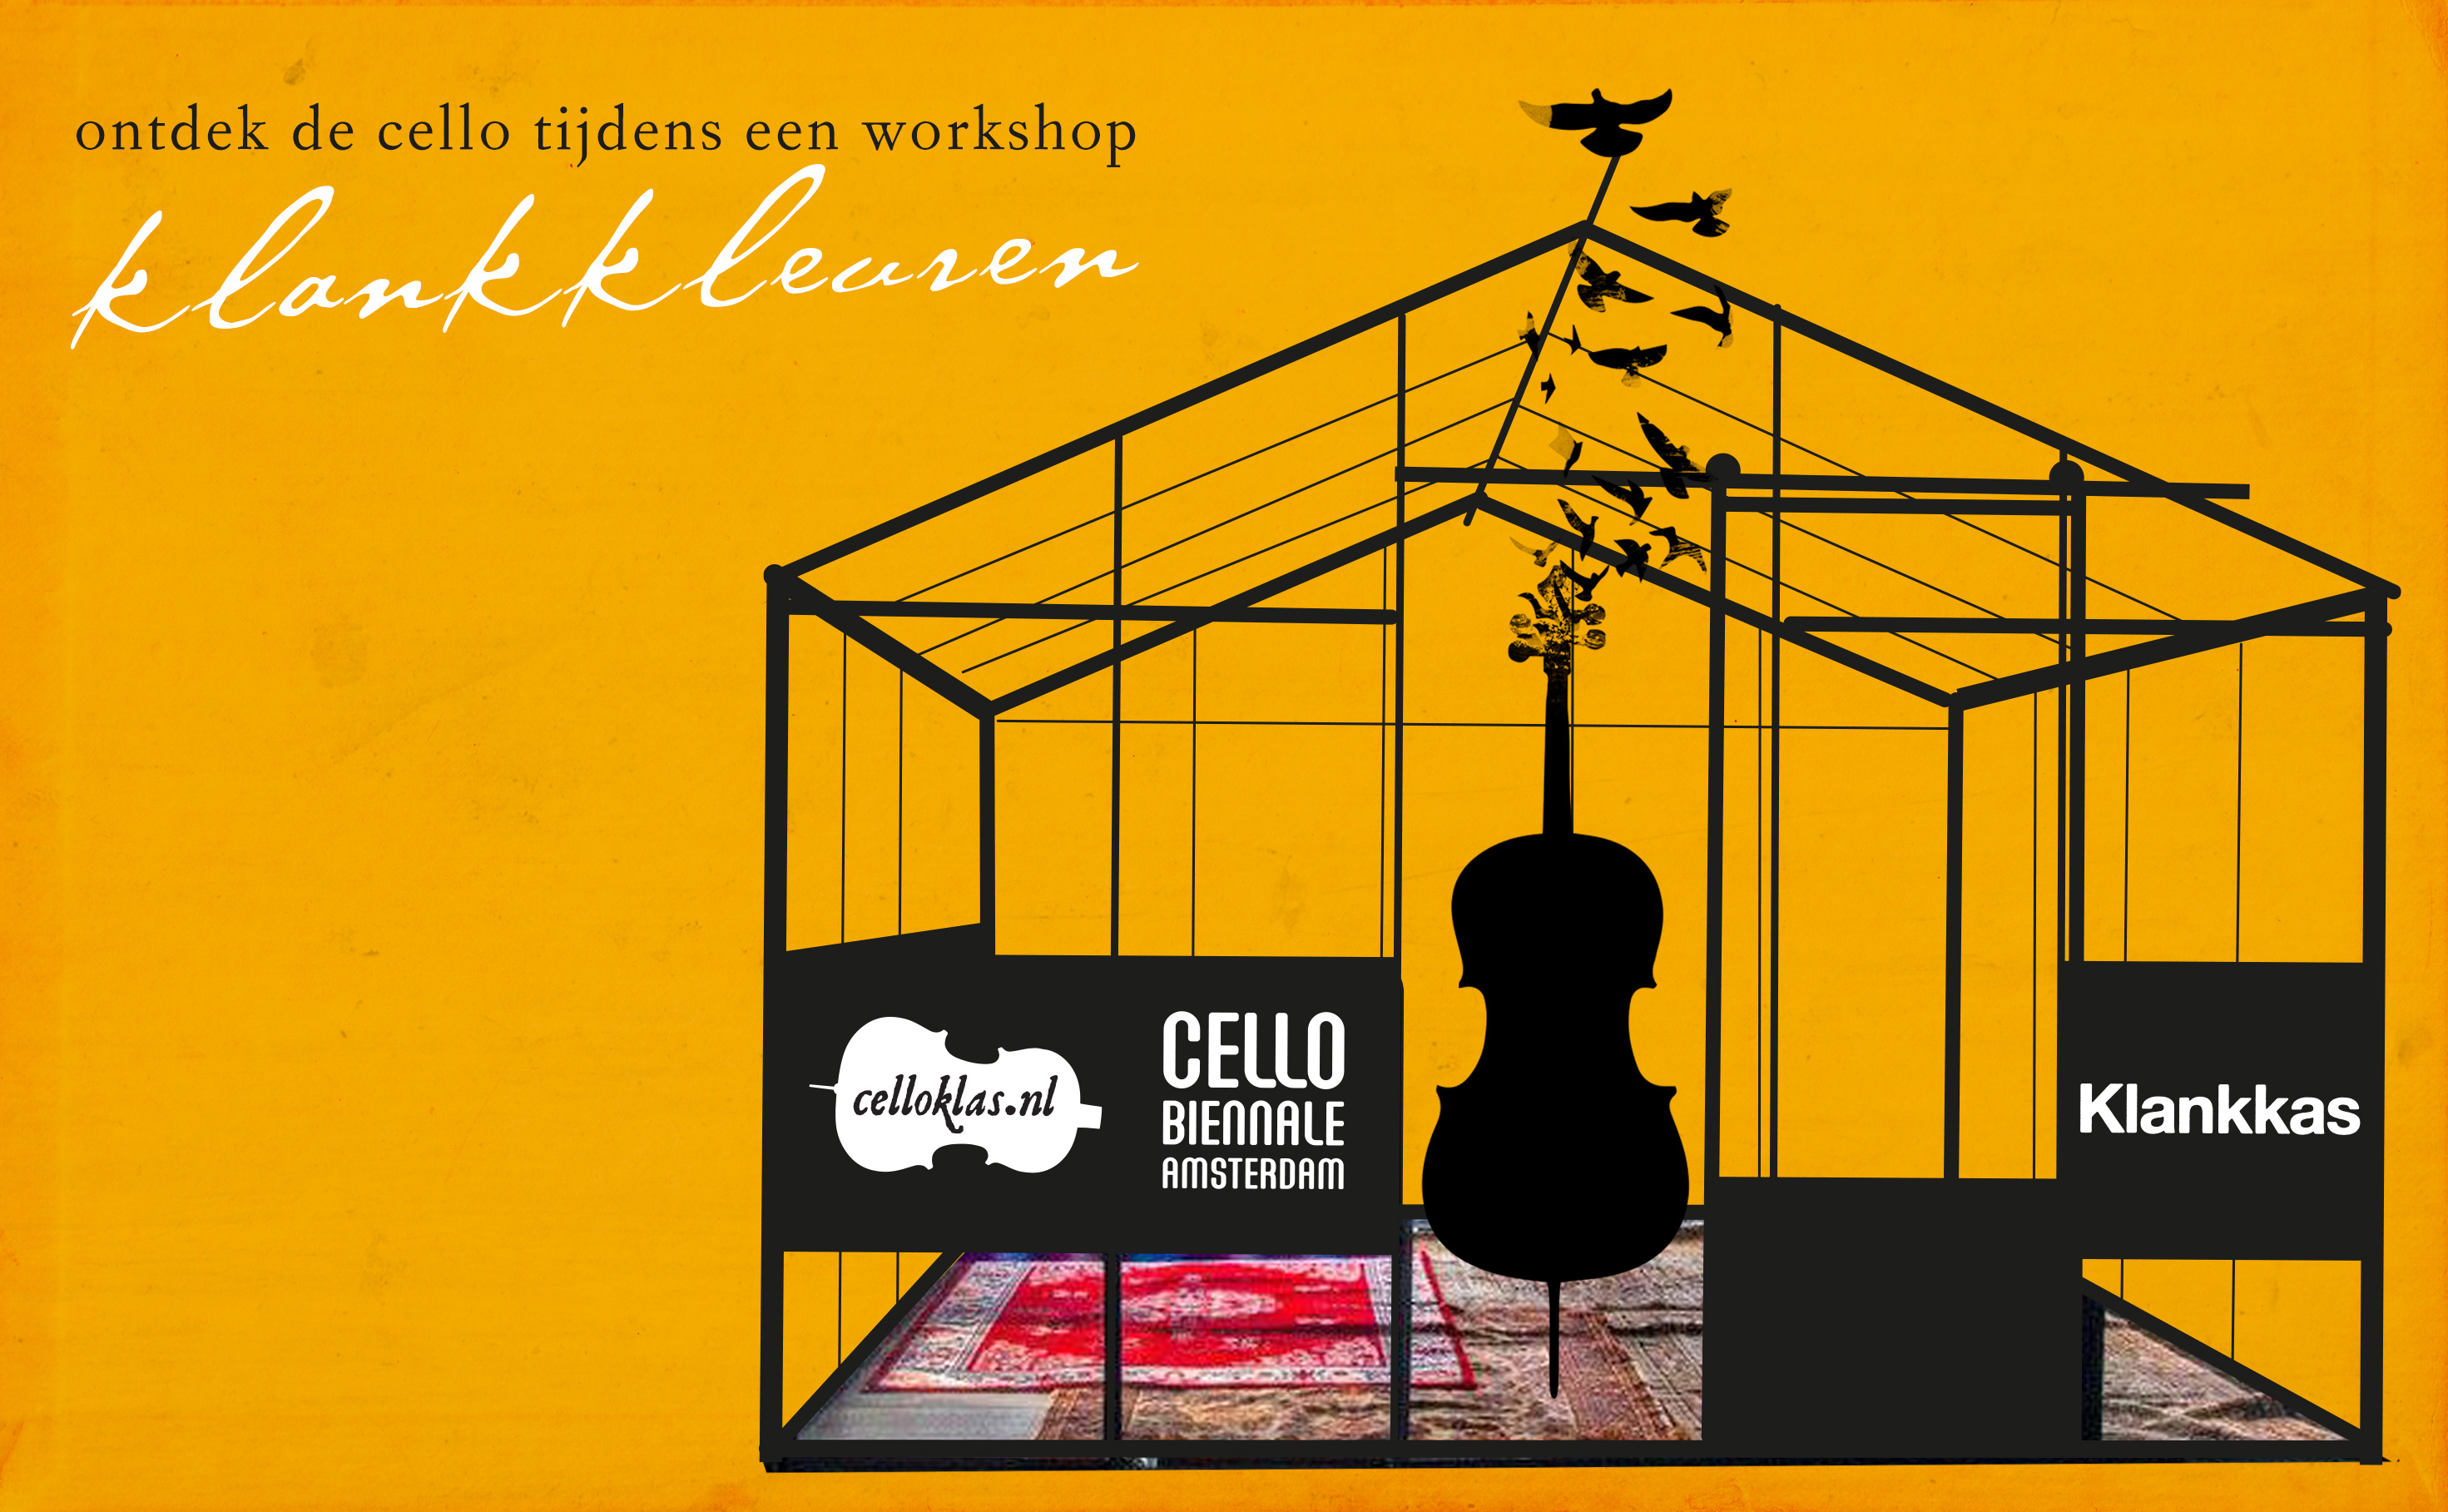 Workshop klankkleuren celloklas cello biënnale 2018 klankkas